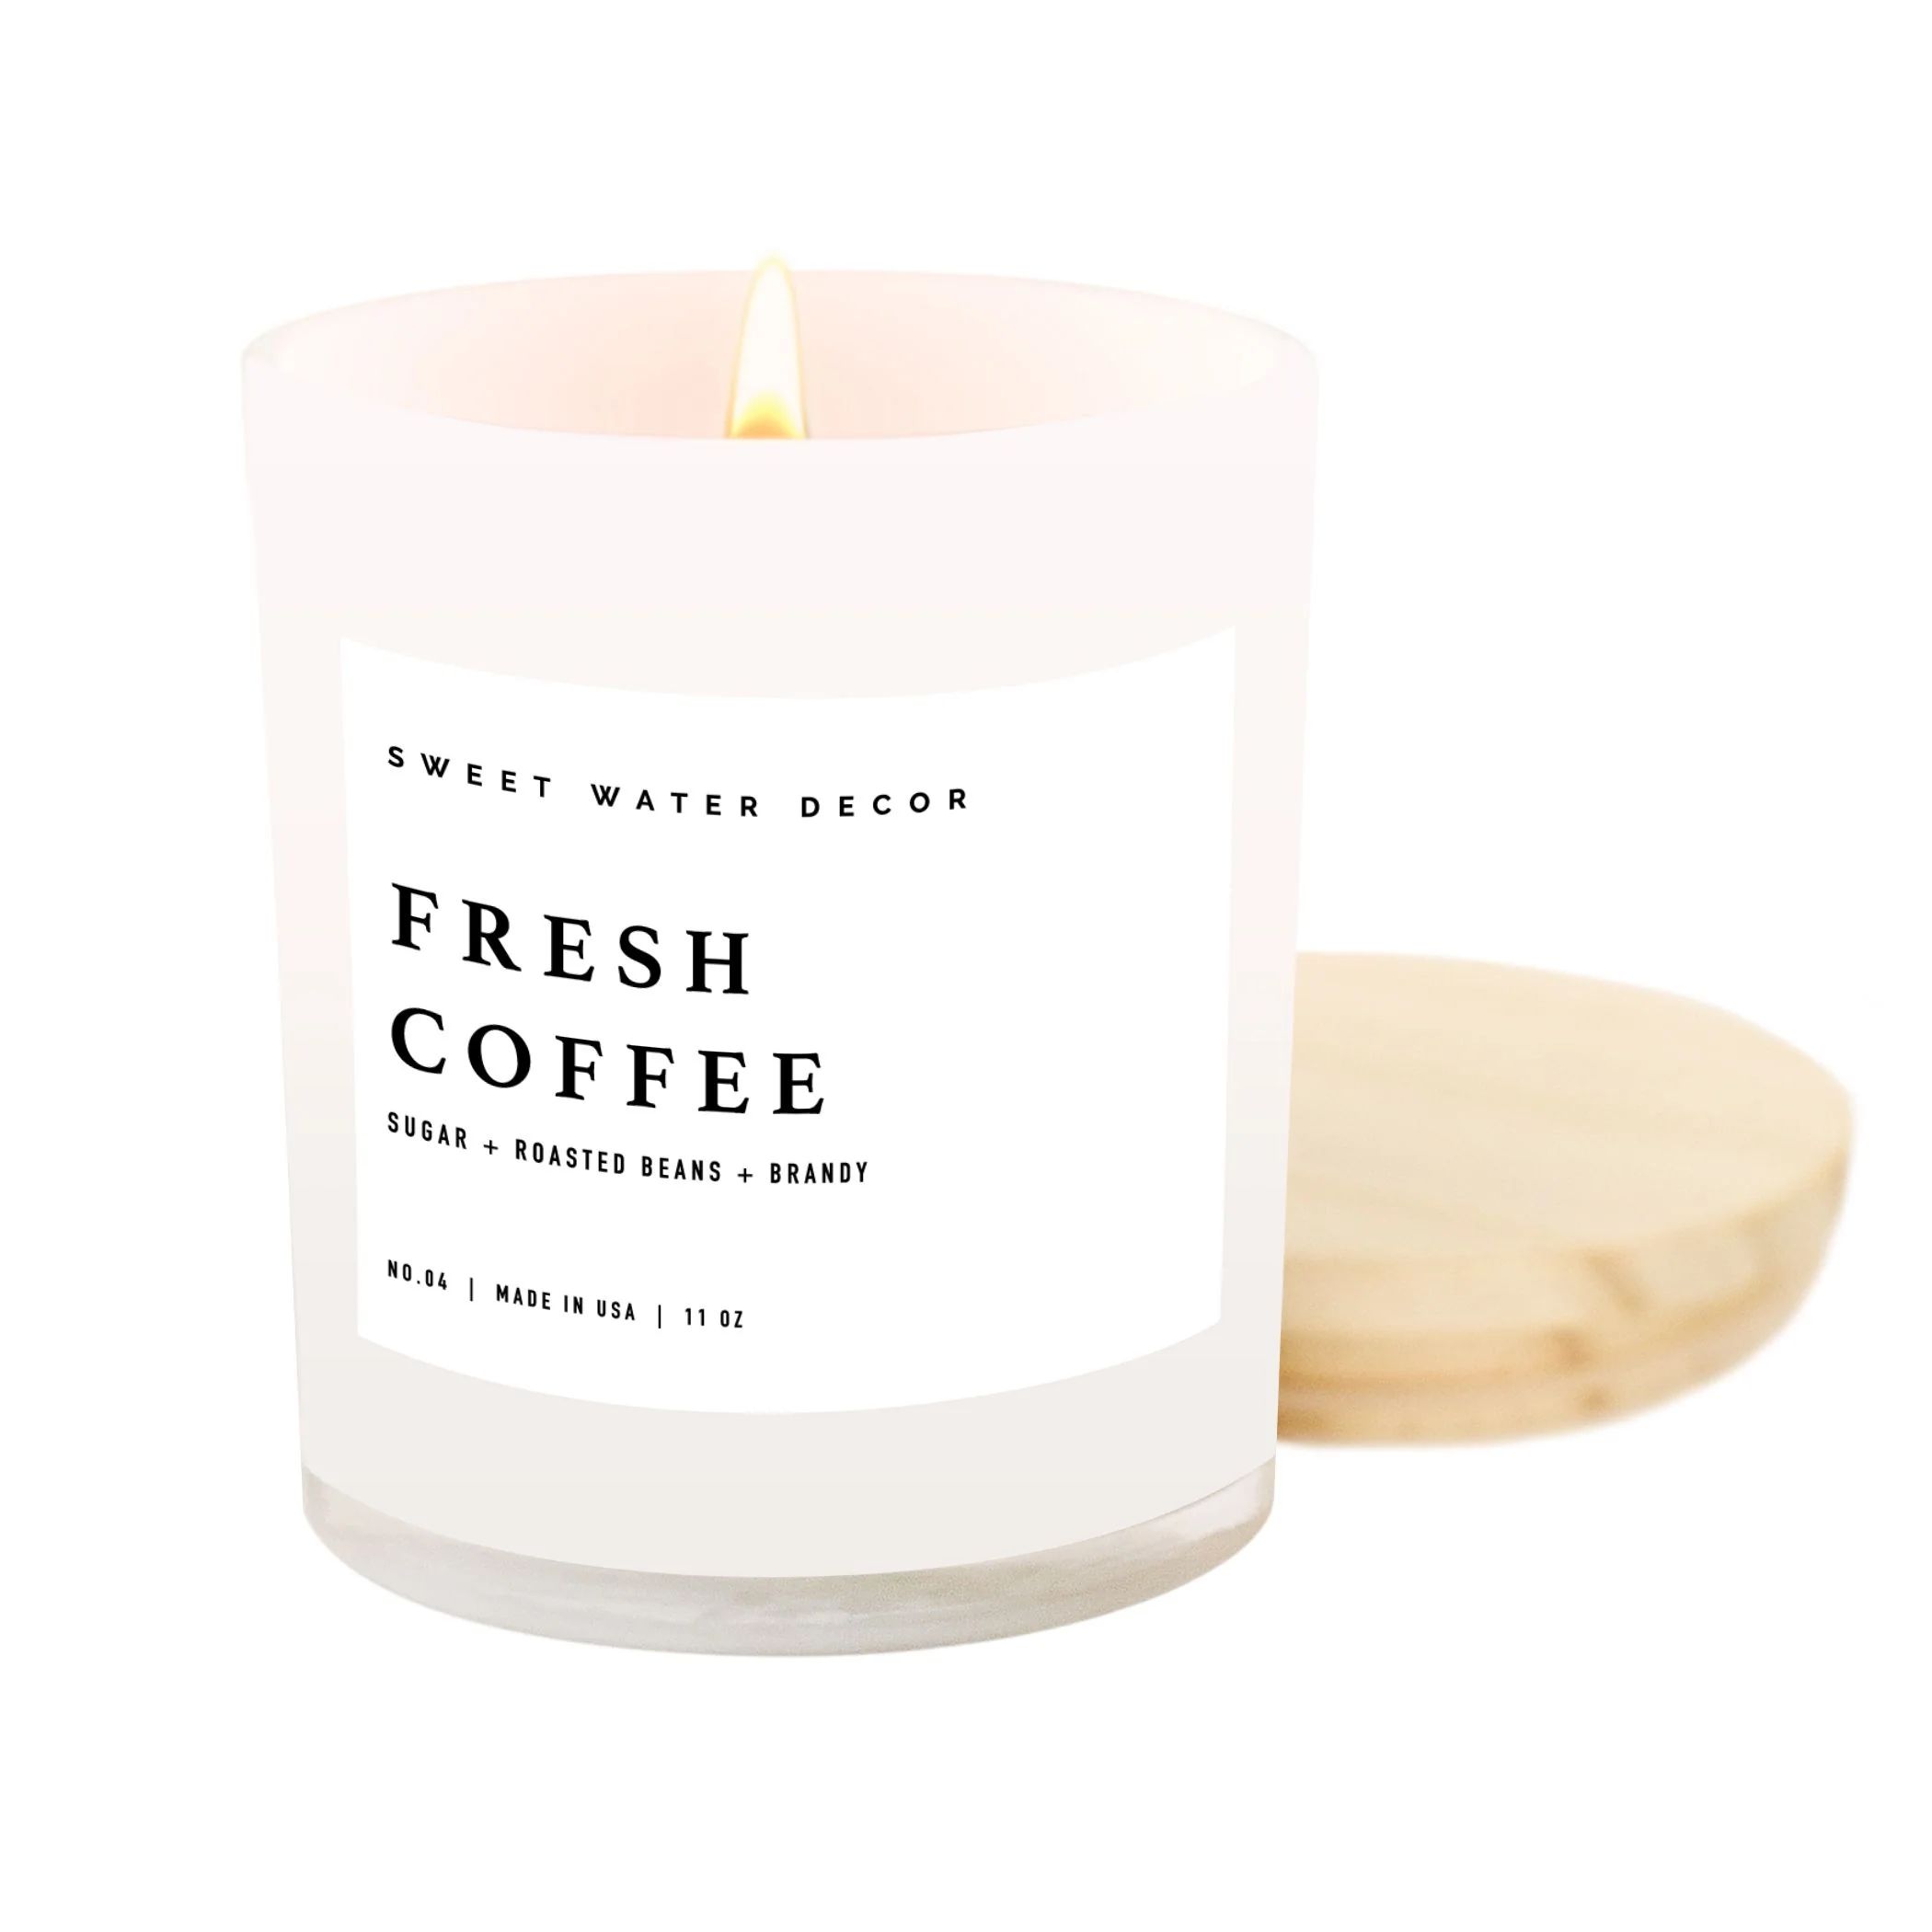 Fresh Coffee Soy Candle - White Jar - 11 oz | Sweet Water Decor, LLC